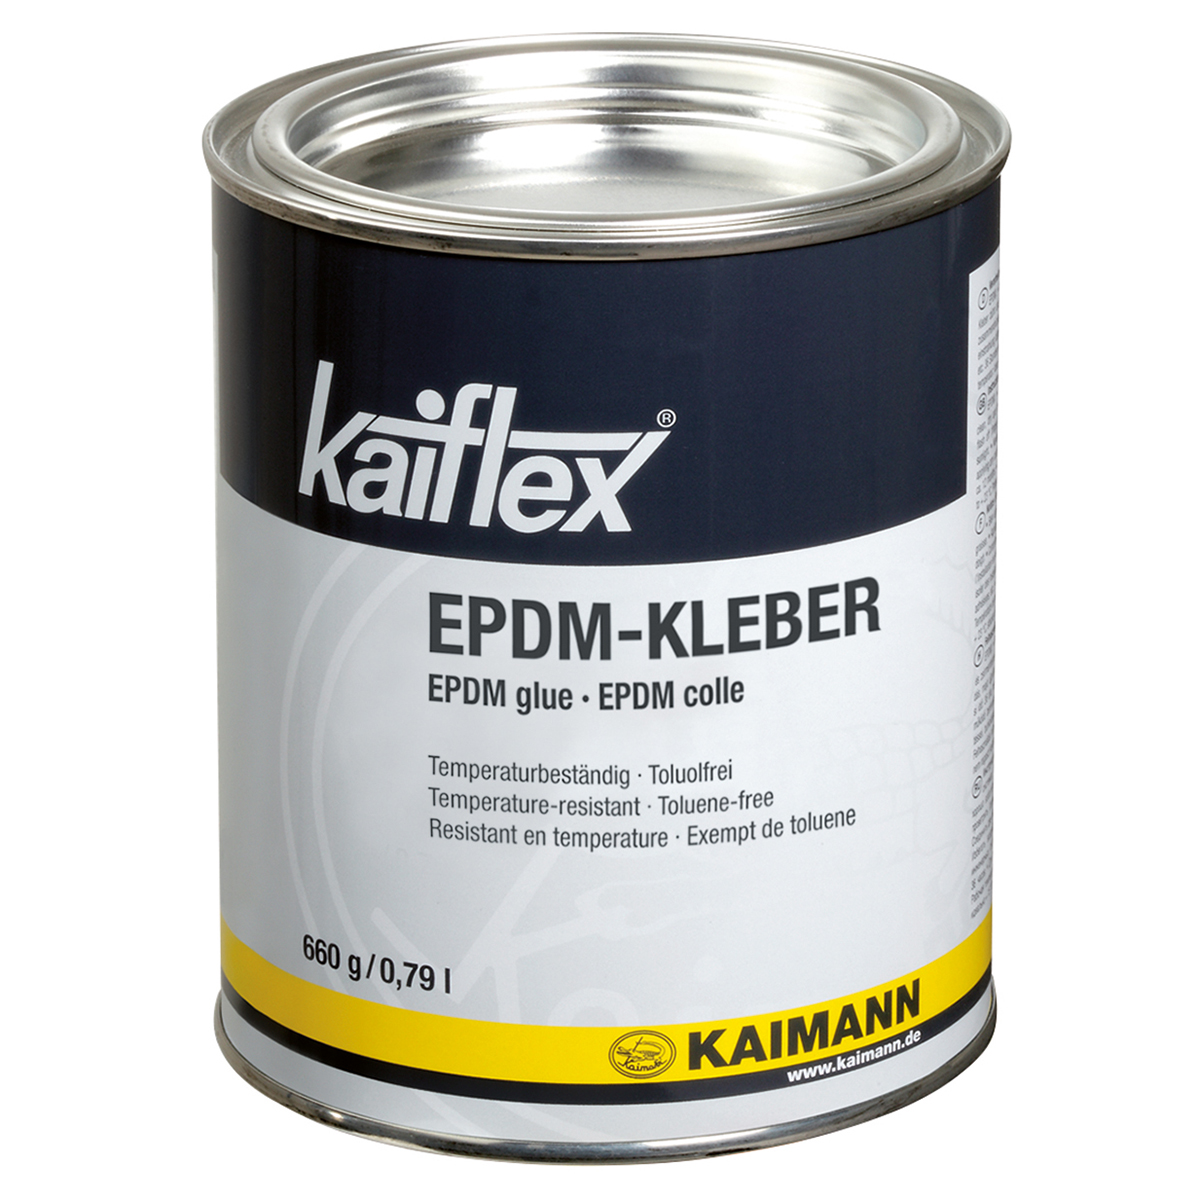 Kaiflex EPDM Kleber